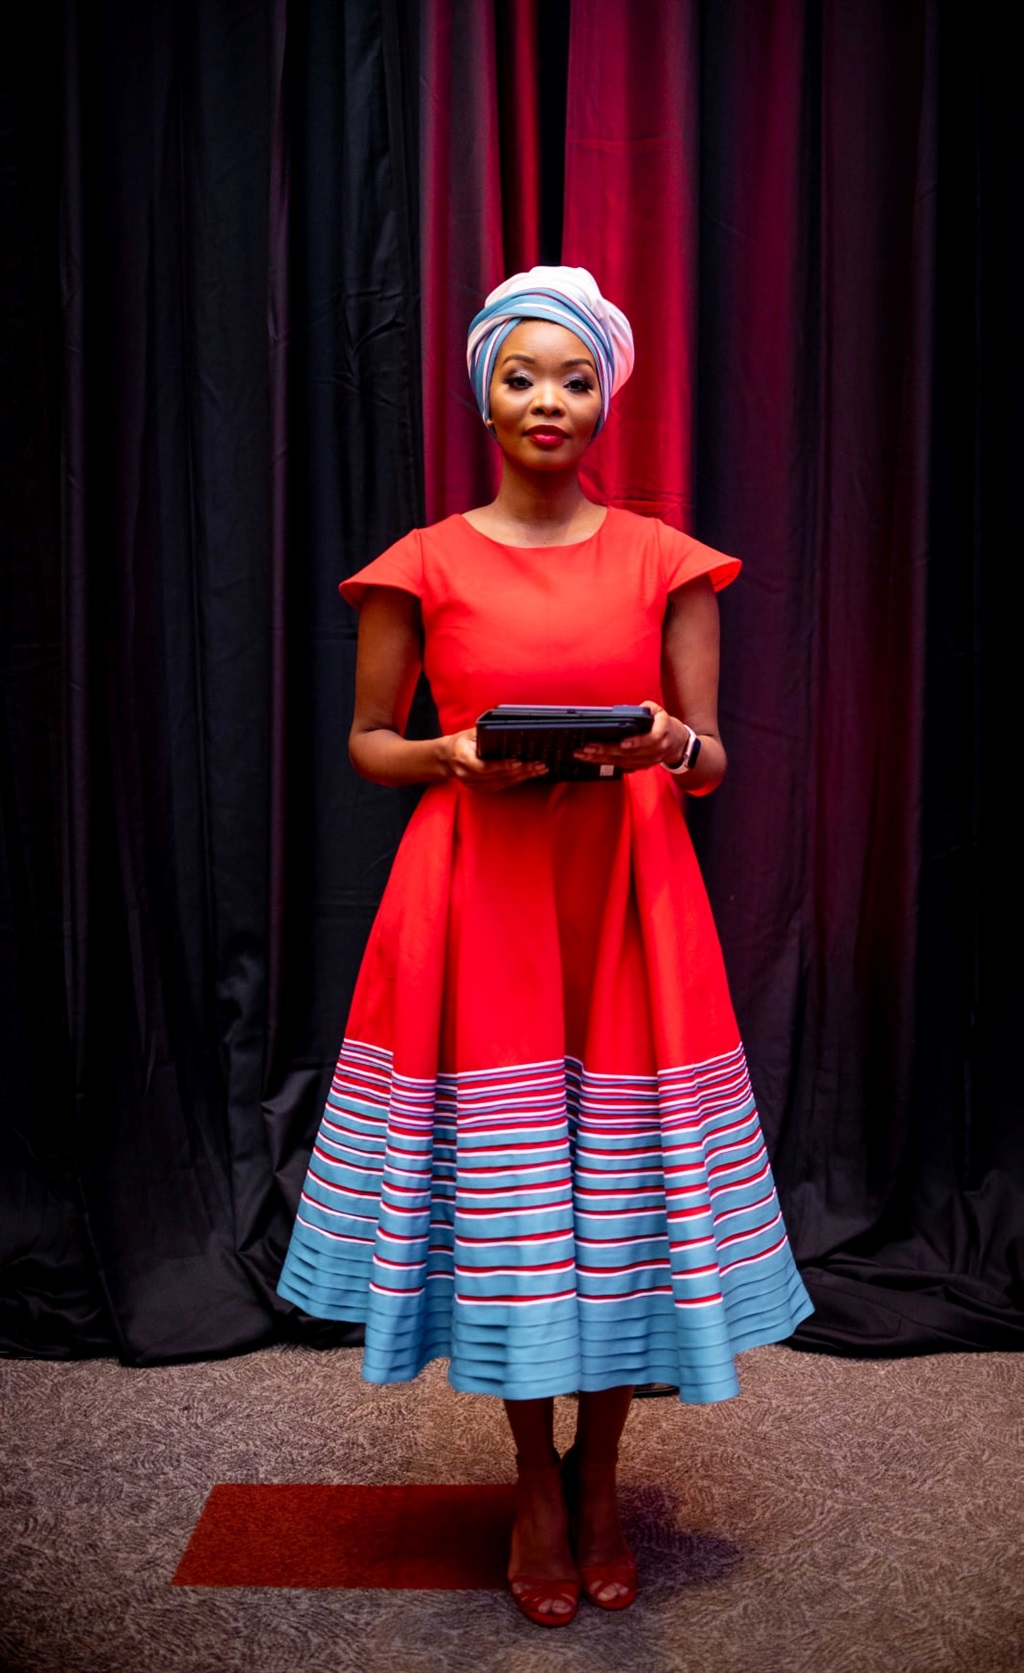 News anchor, Nzinga Qunta is now a published author.